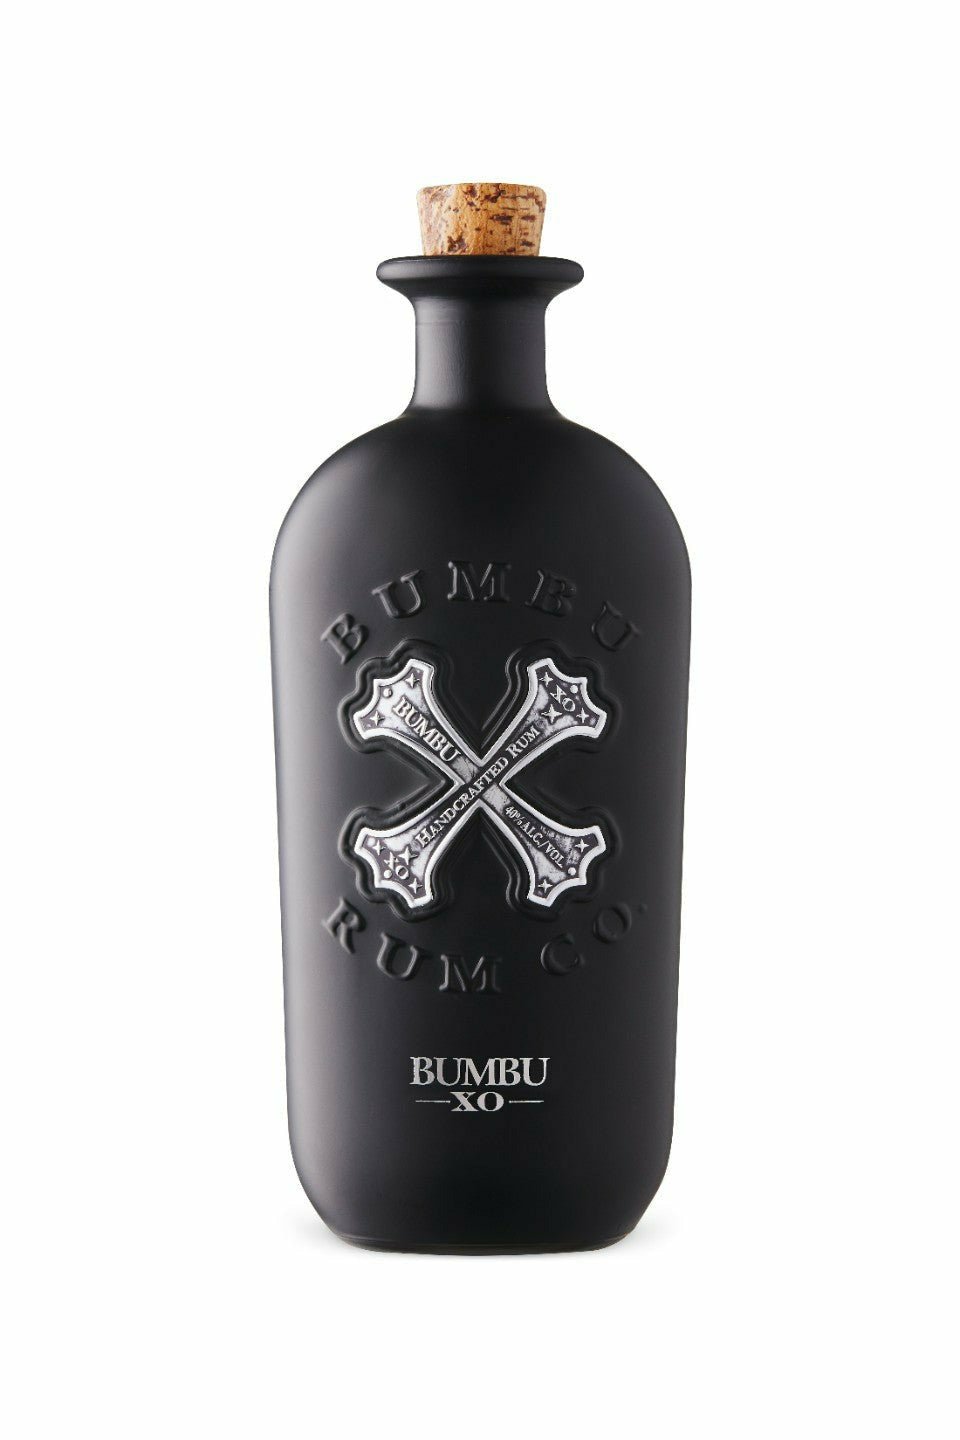 Bumbu XO Rum - francosliquorstore